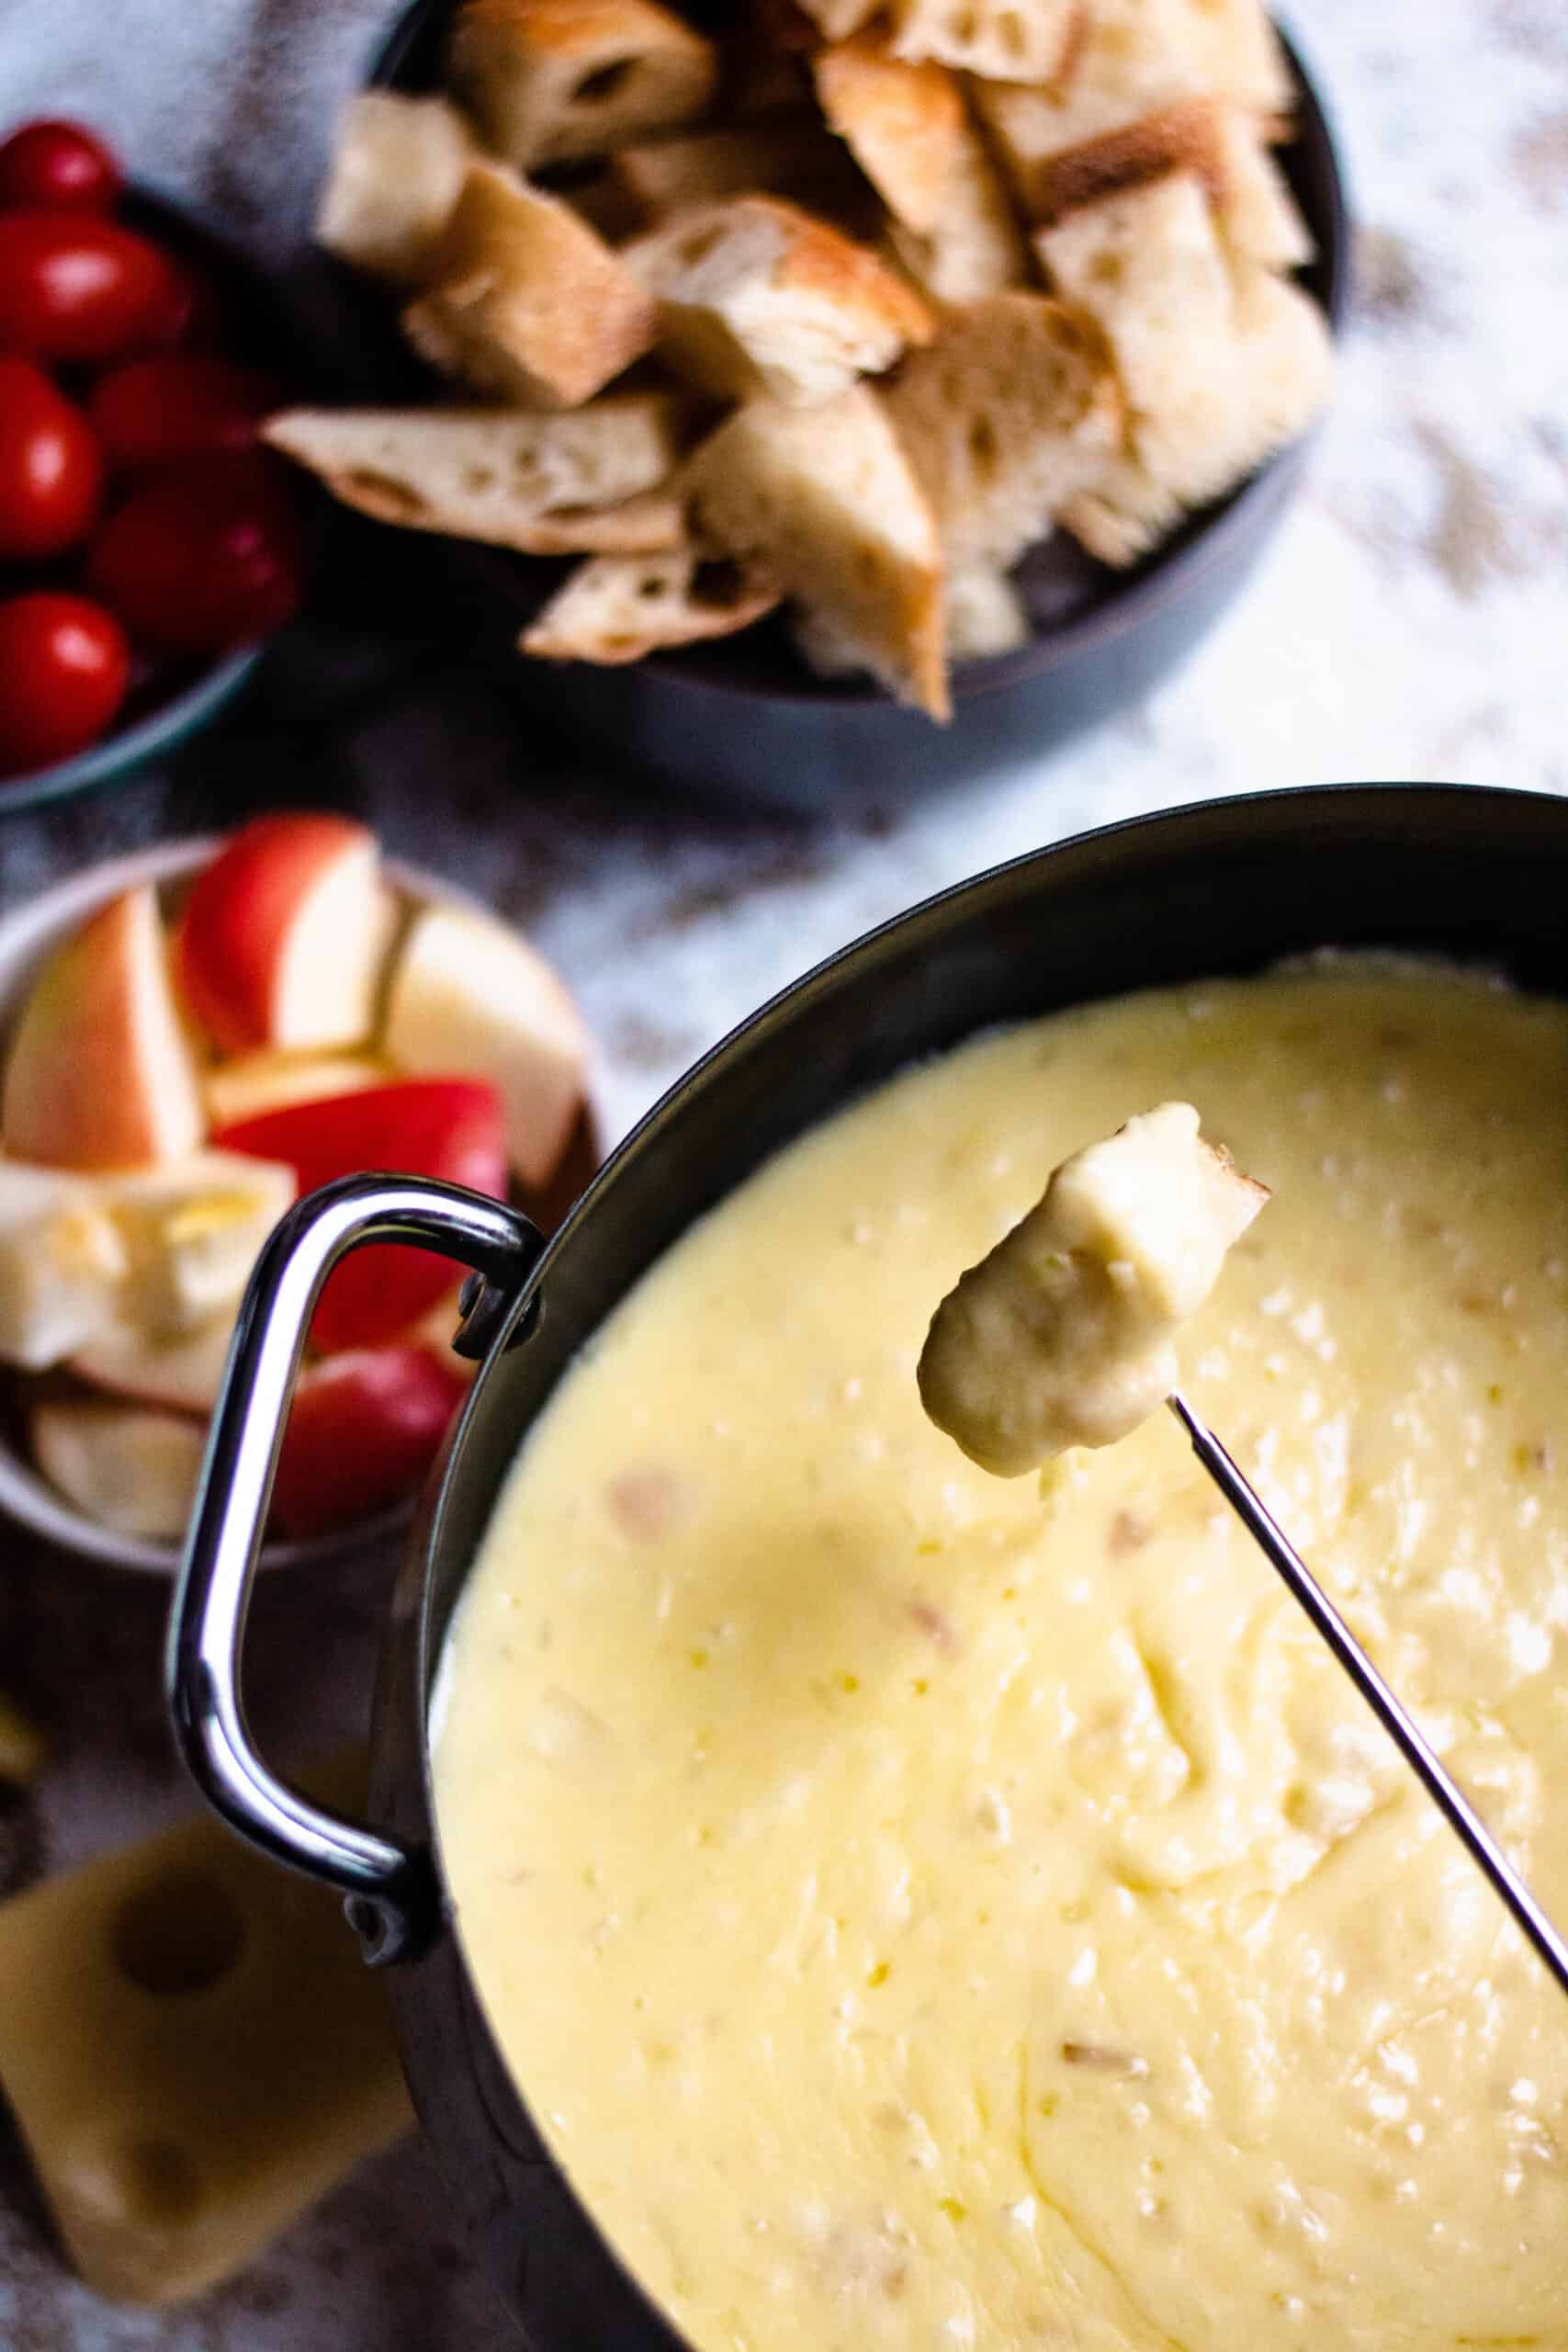 Cheese fondue dipping